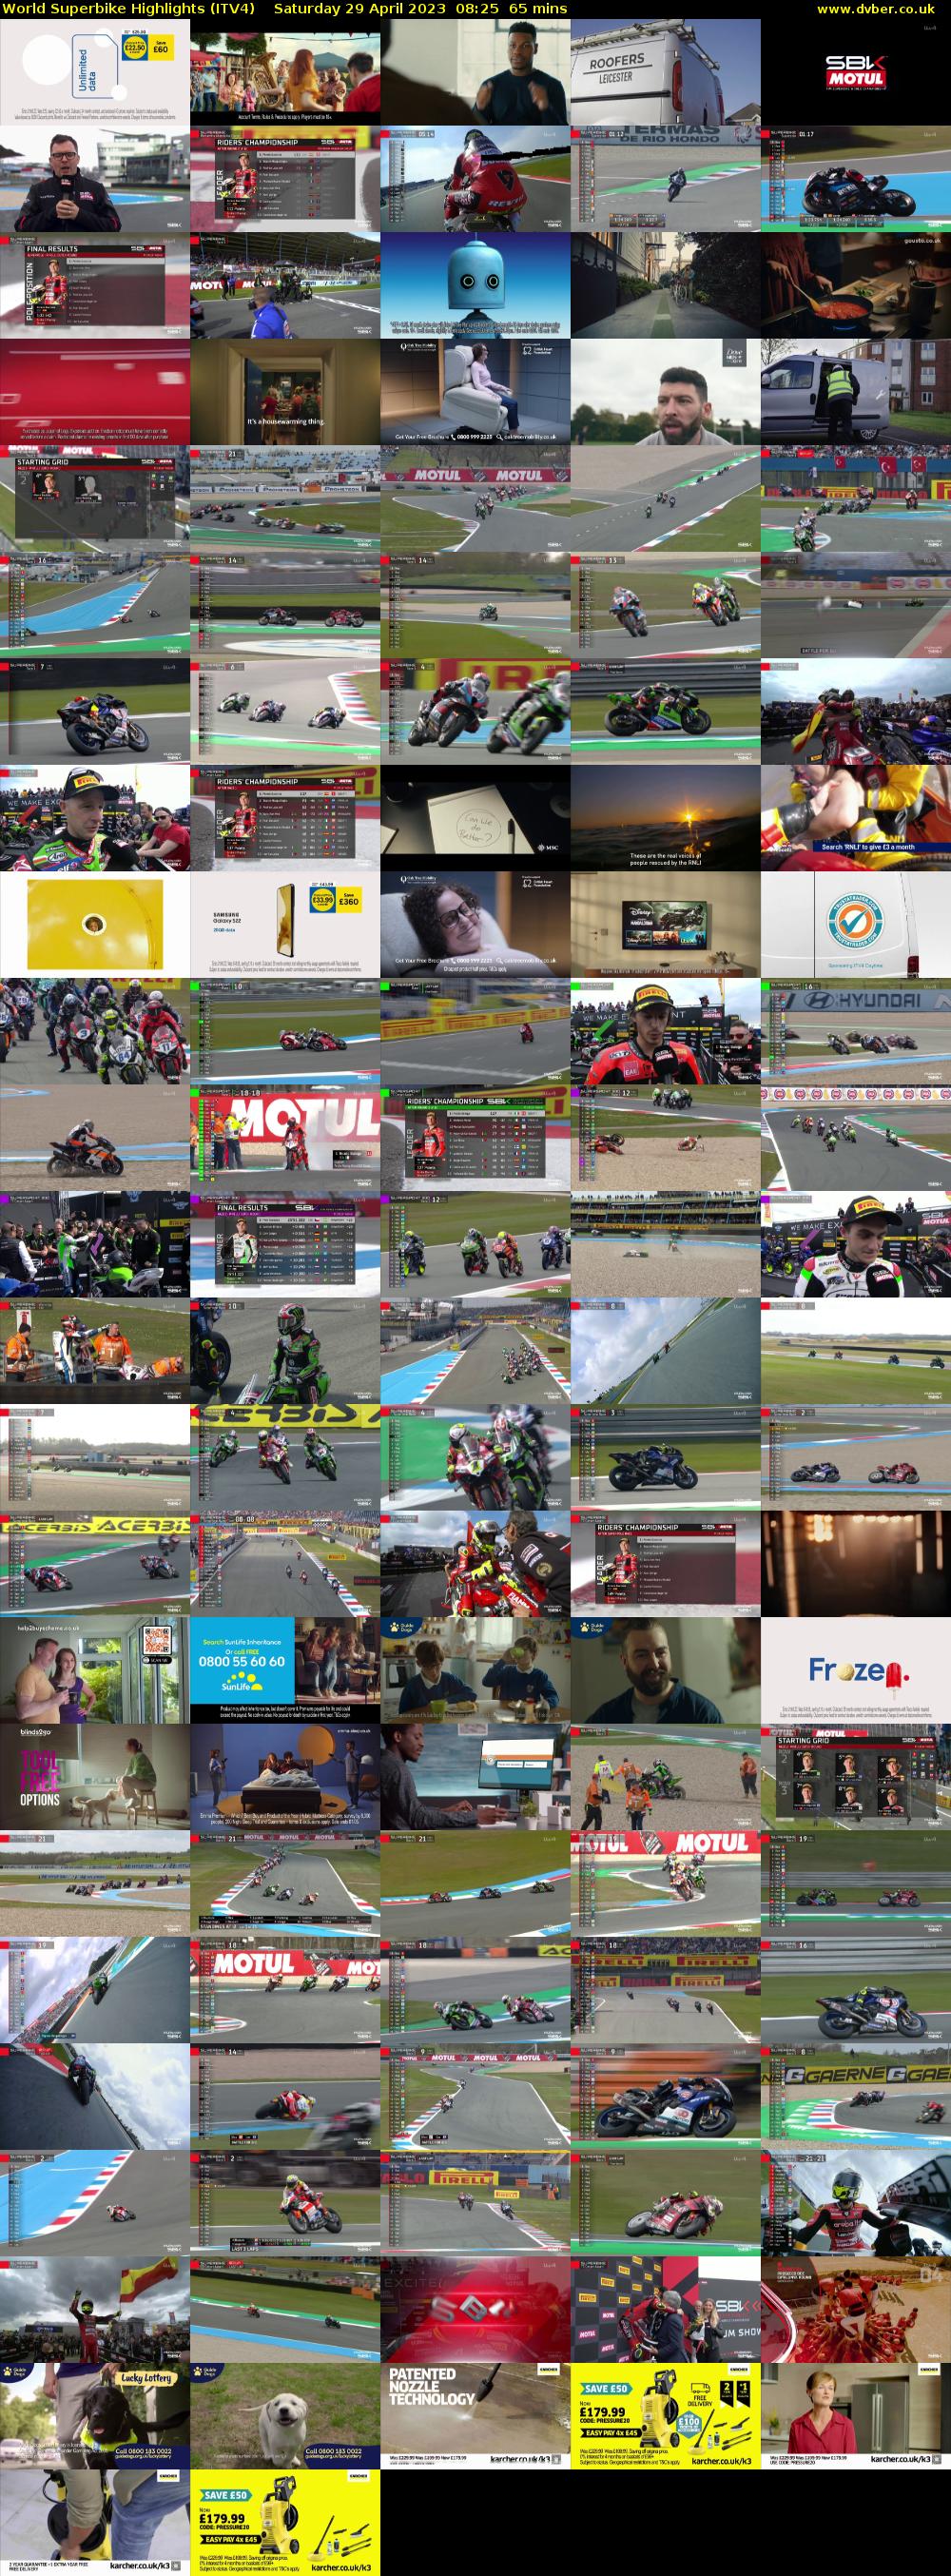 World Superbike Highlights (ITV4) Saturday 29 April 2023 08:25 - 09:30